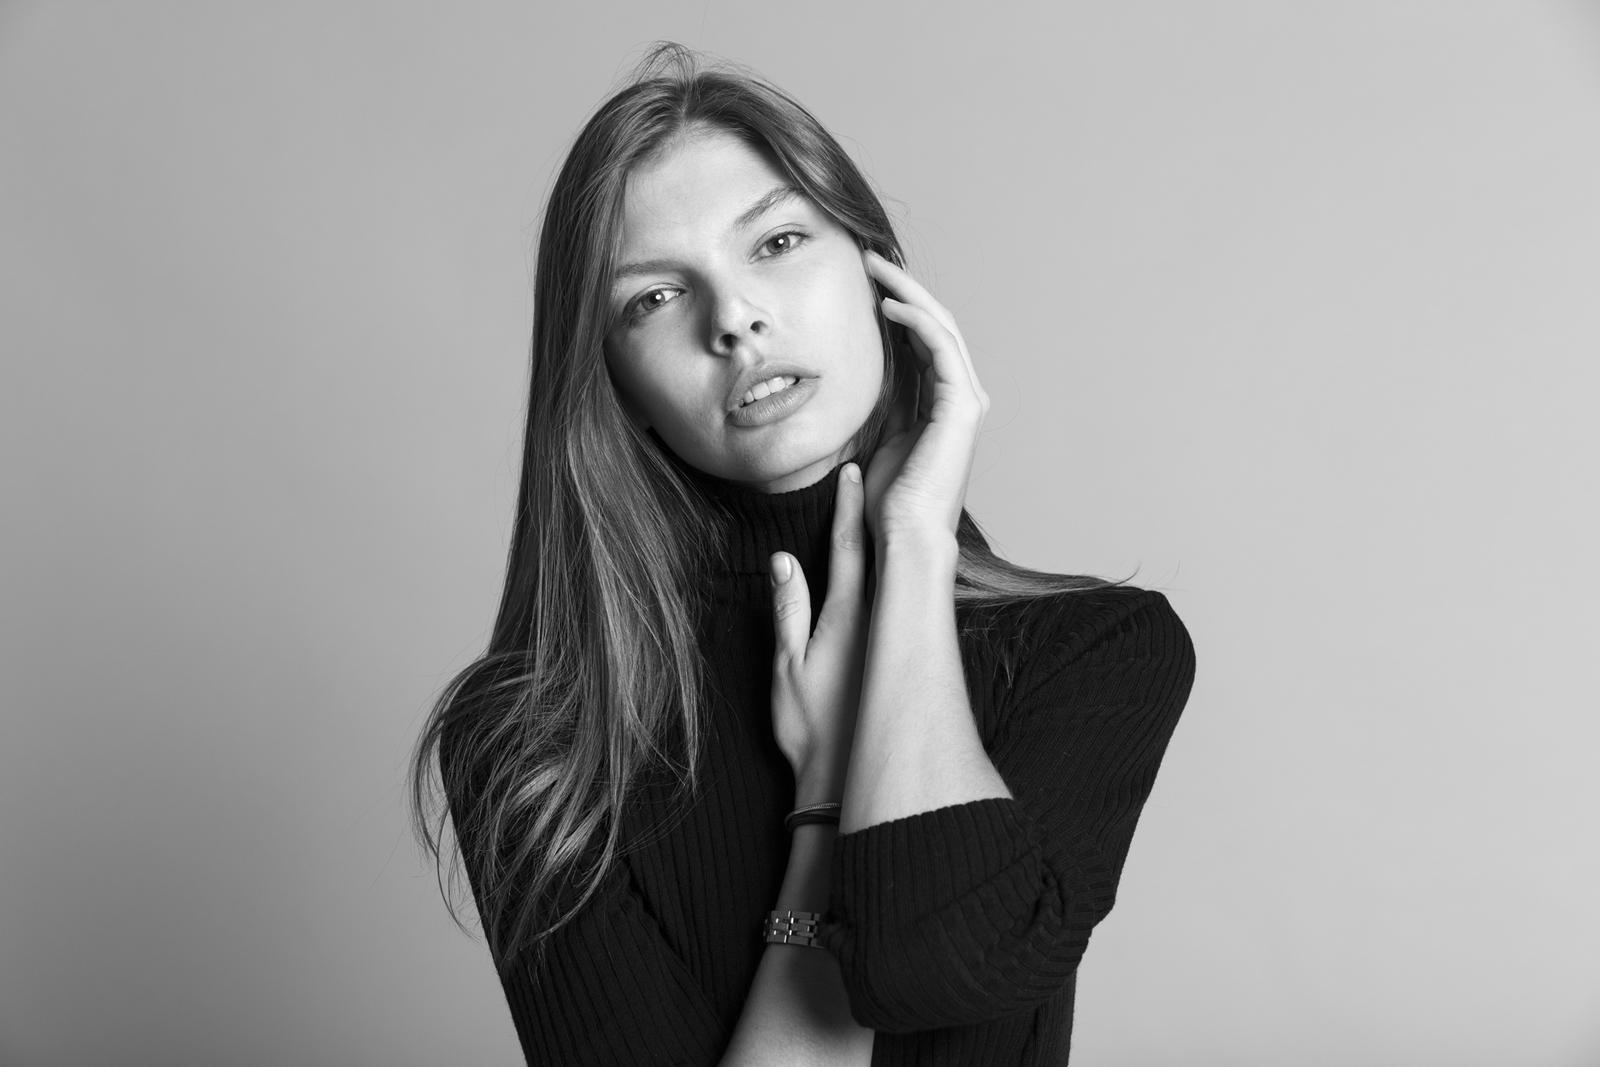 Yulia mademoiselle models noir blanc Unique Agency